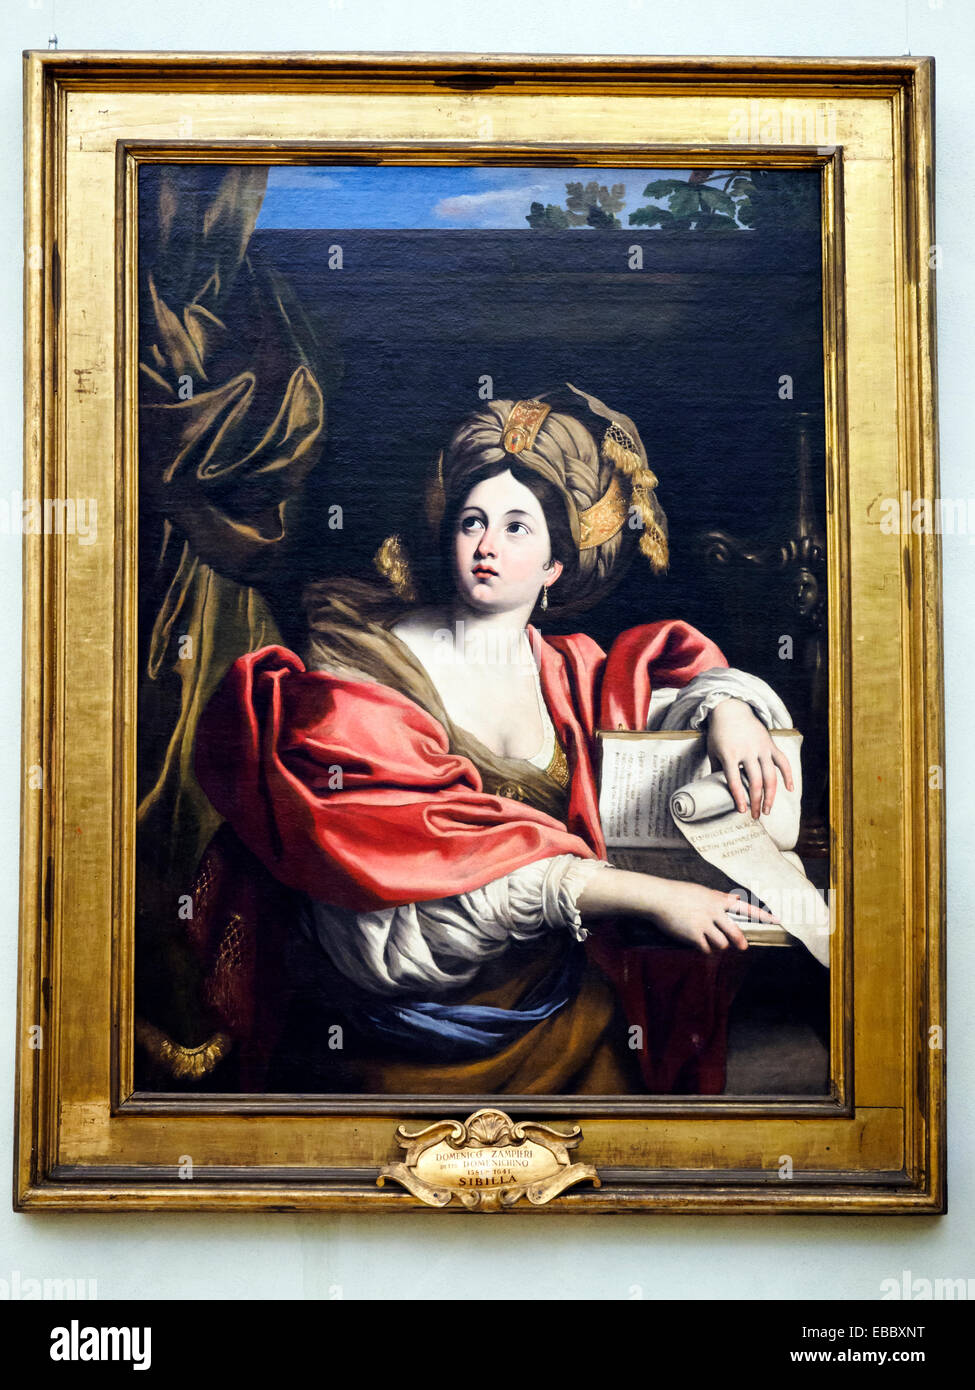 Domenichino (Bologna 1581 - Napoli 1641) Sibilla cumana (Cumaean Sibyl) oil on canvas Musei Capitolini - Roma, Italy Stock Photo